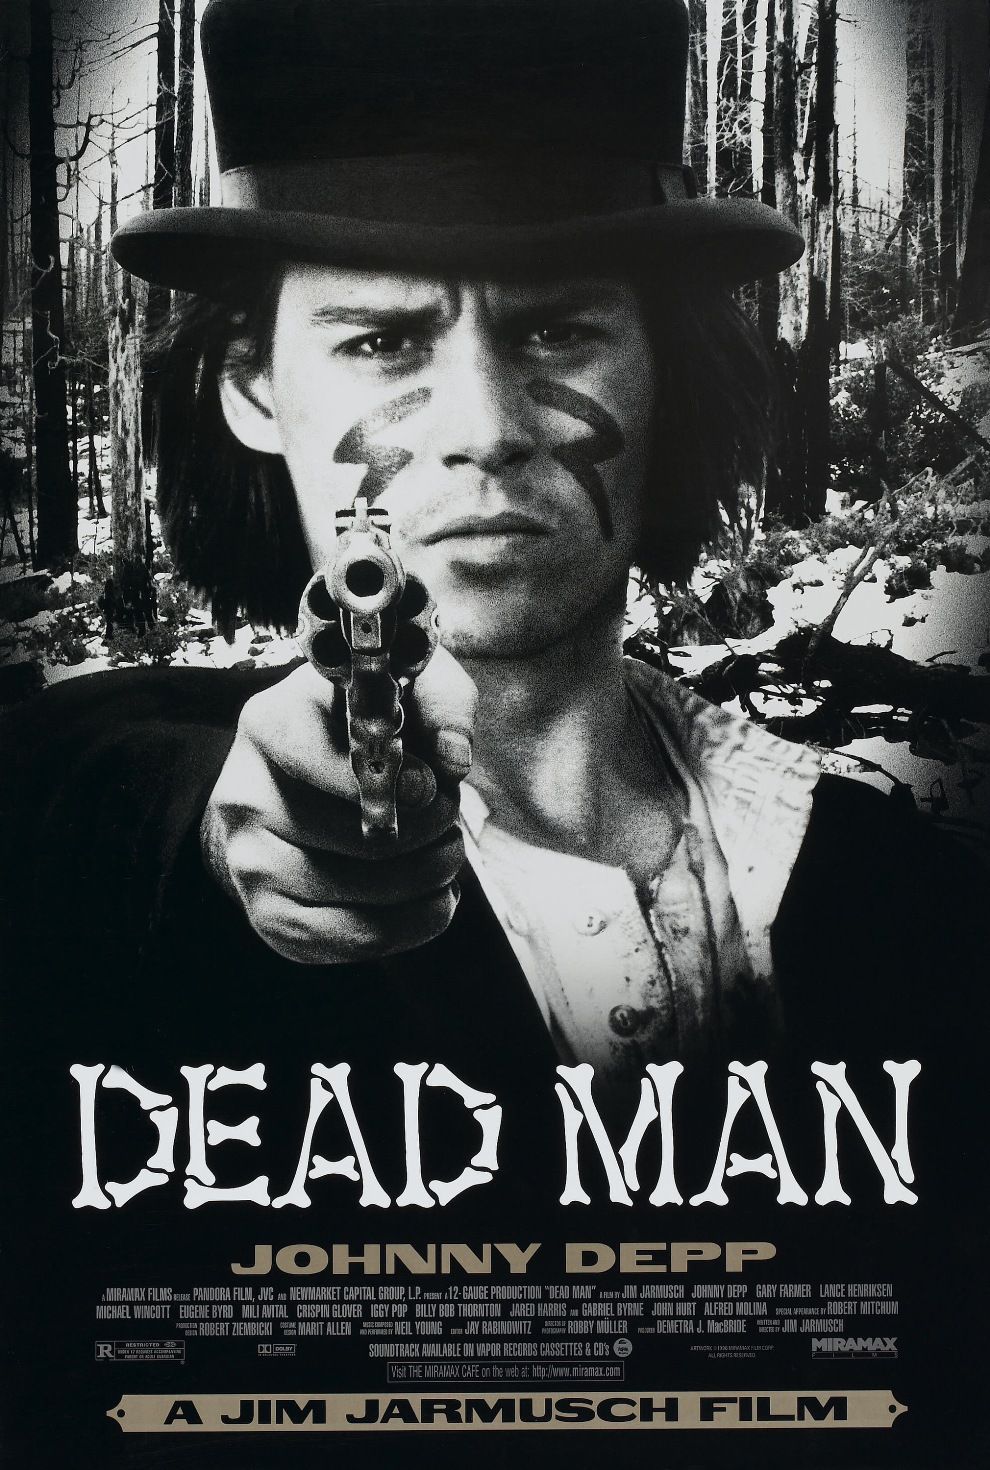 Dead man affiche.jpg